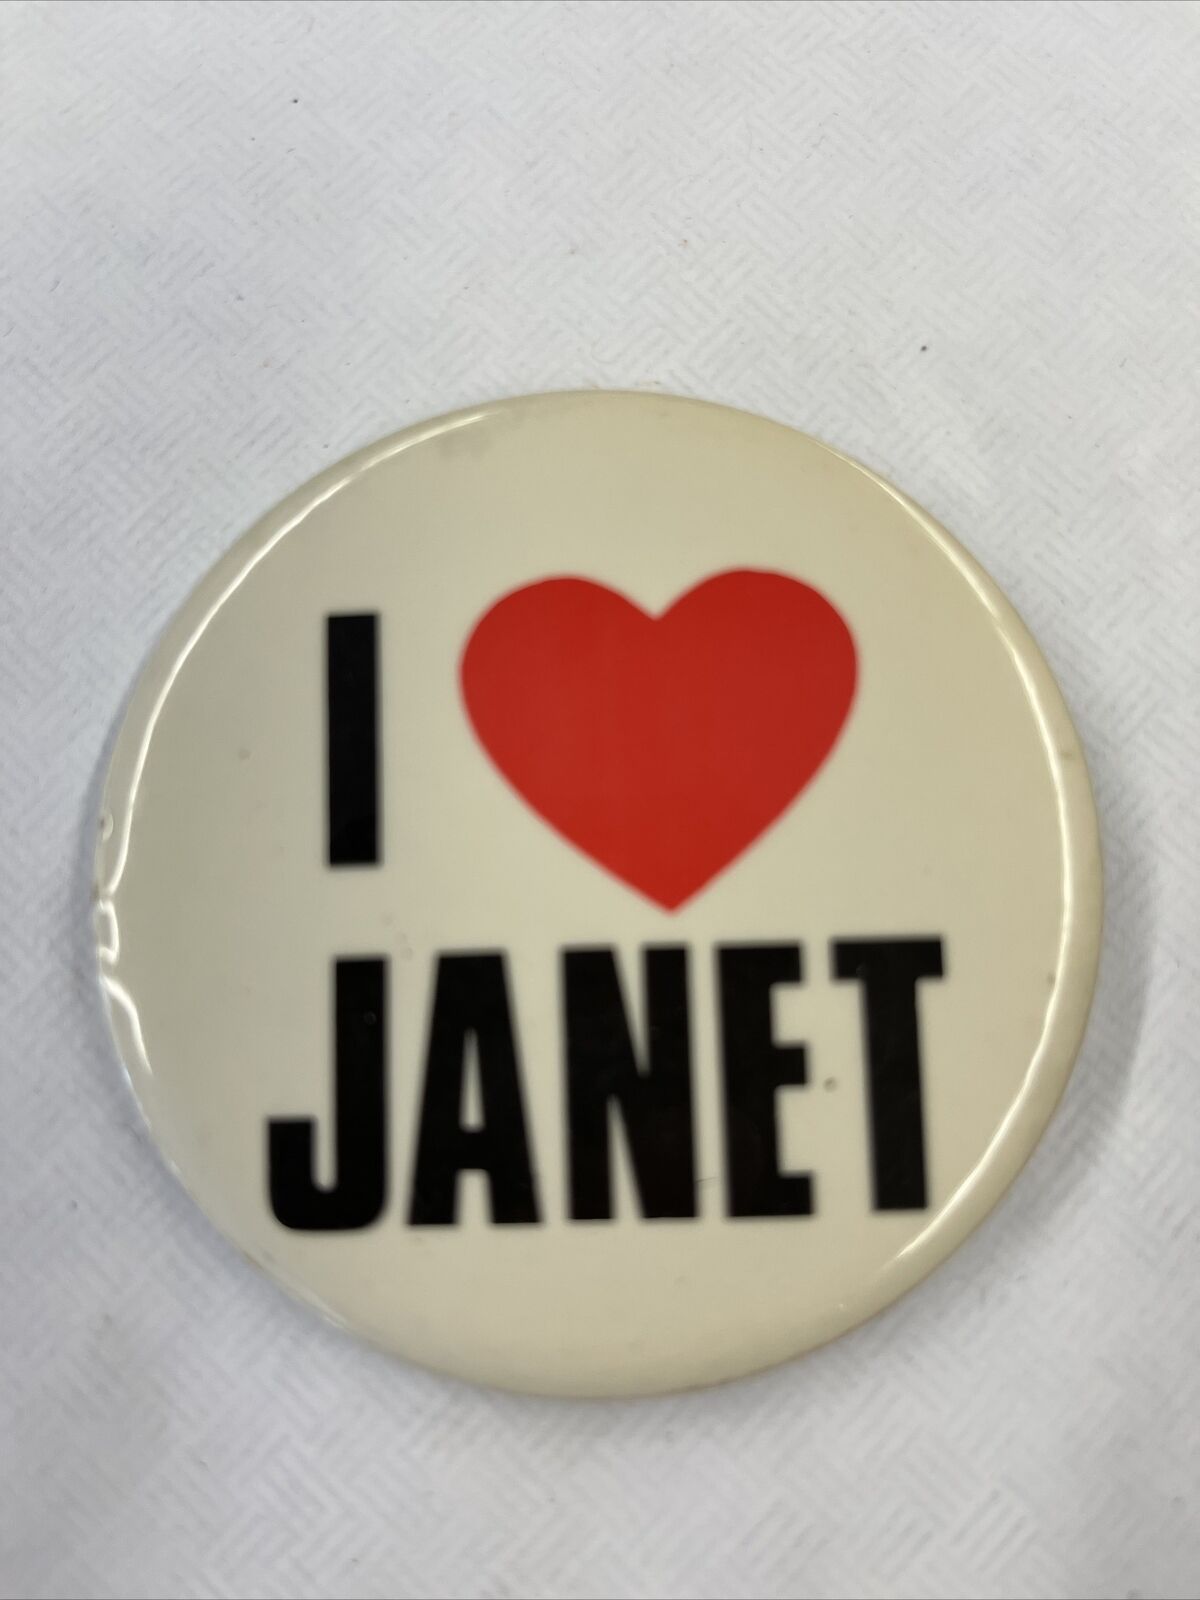 I Love Janet Vintage 1980s Pinback Button